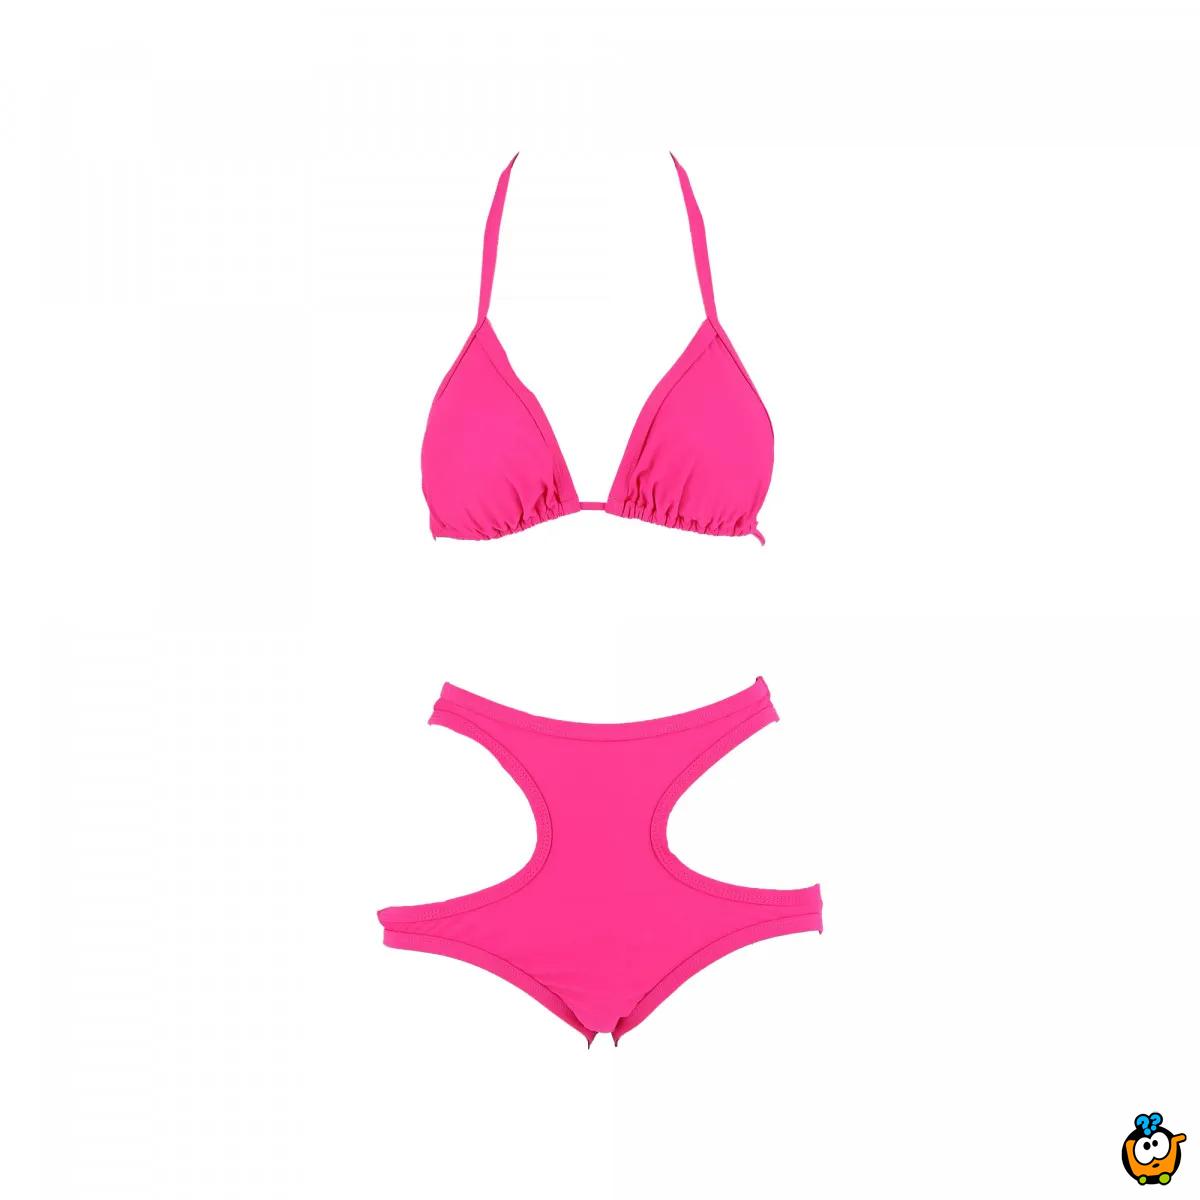 Dvodelni ženski kupaći kostim - LA SEXY PINK